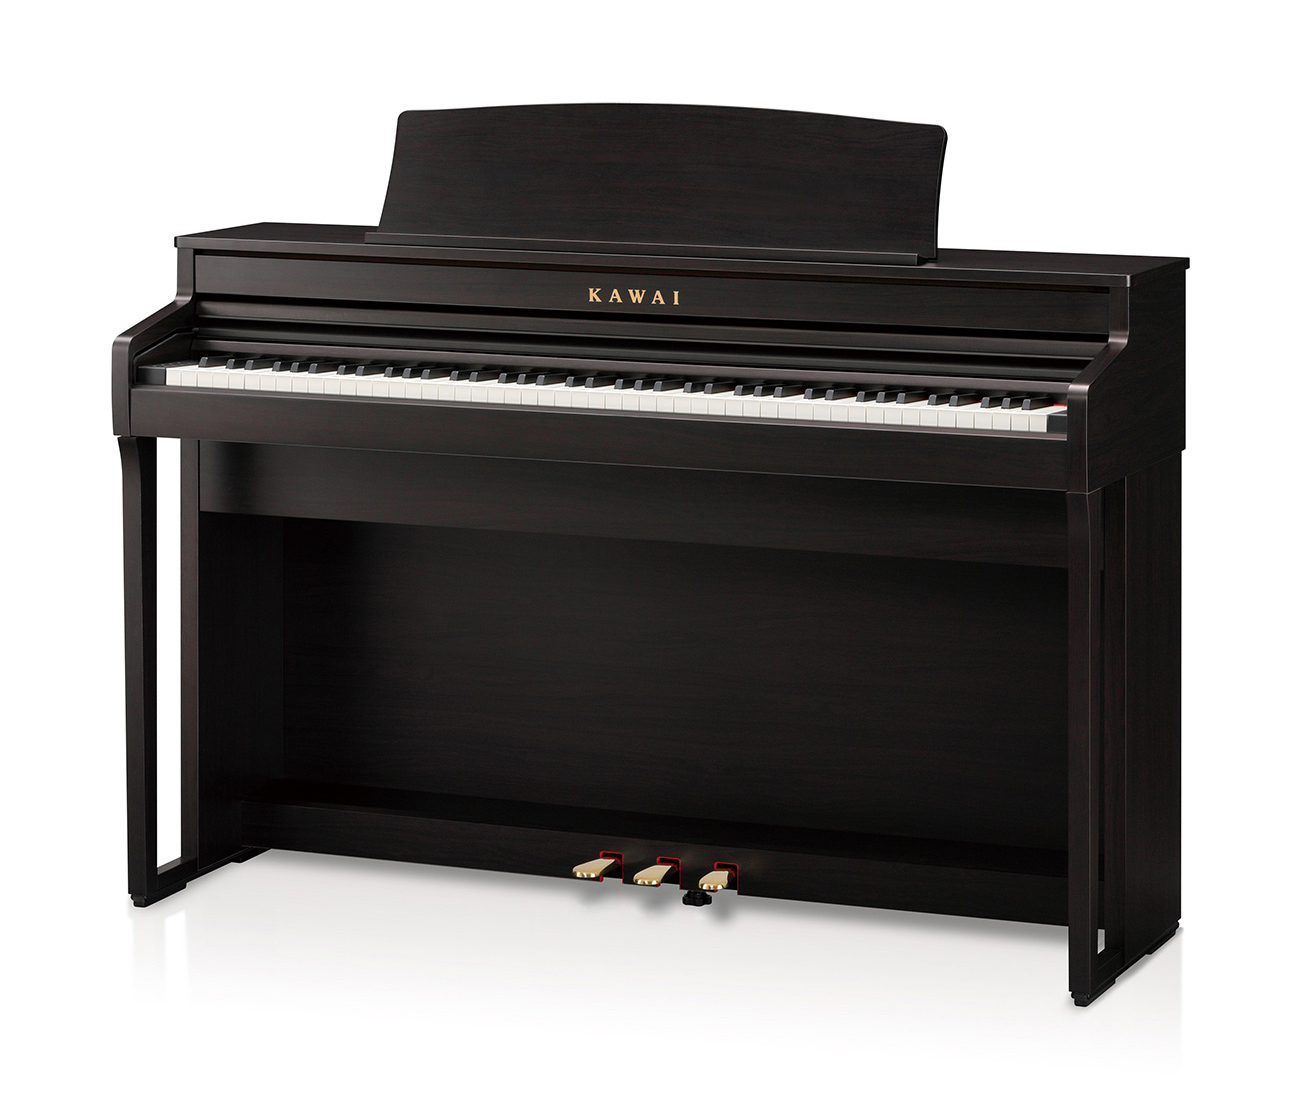 цифровые пианино kawai ca401 r банкетка в комплекте Цифровые пианино Kawai CA401 R